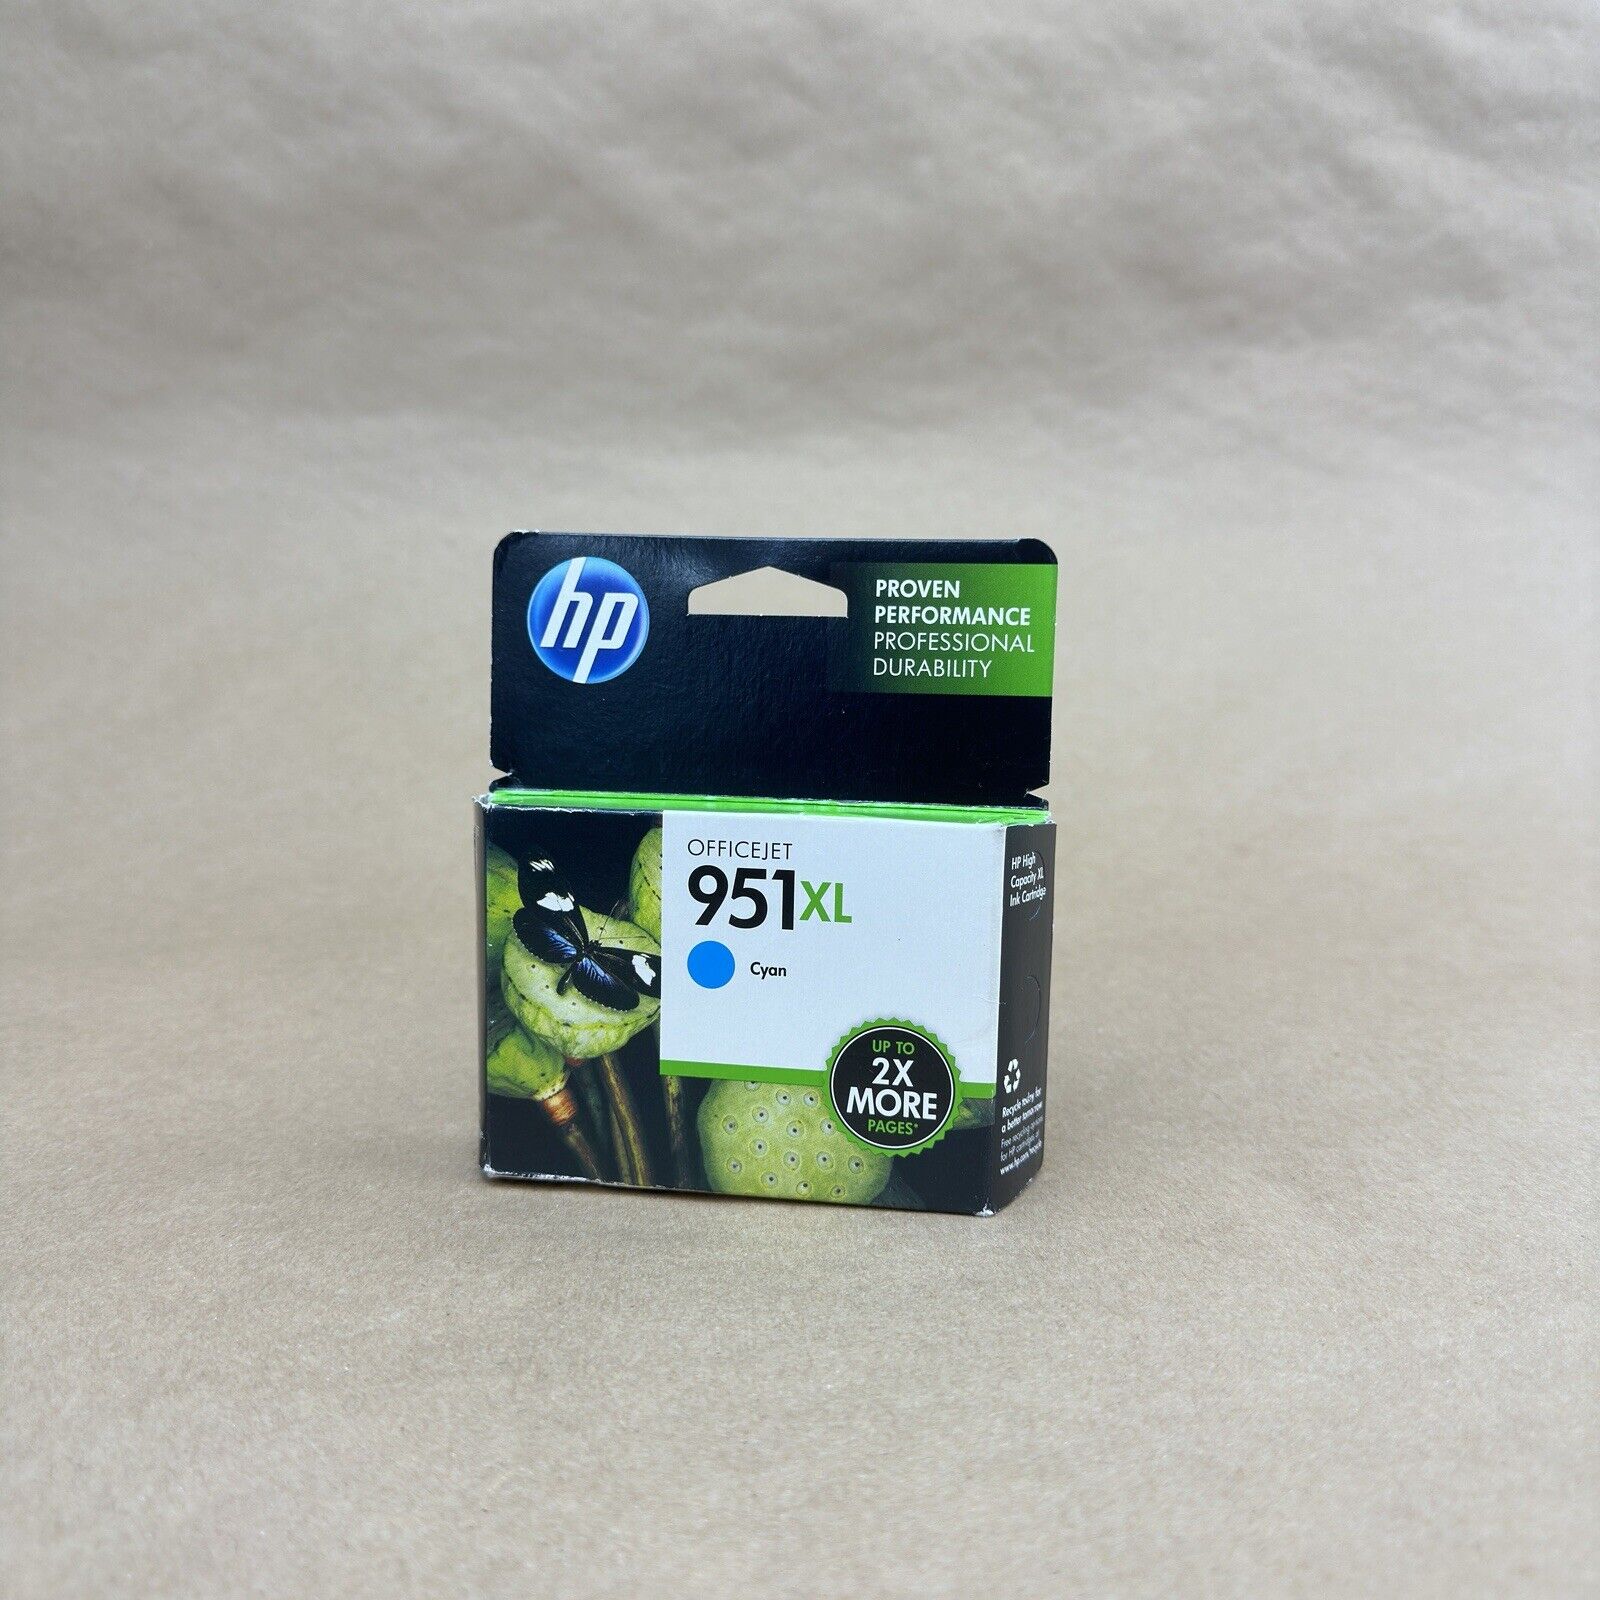 HP 951XL Cyan High Yield Ink Cartridge  Expired May 2014